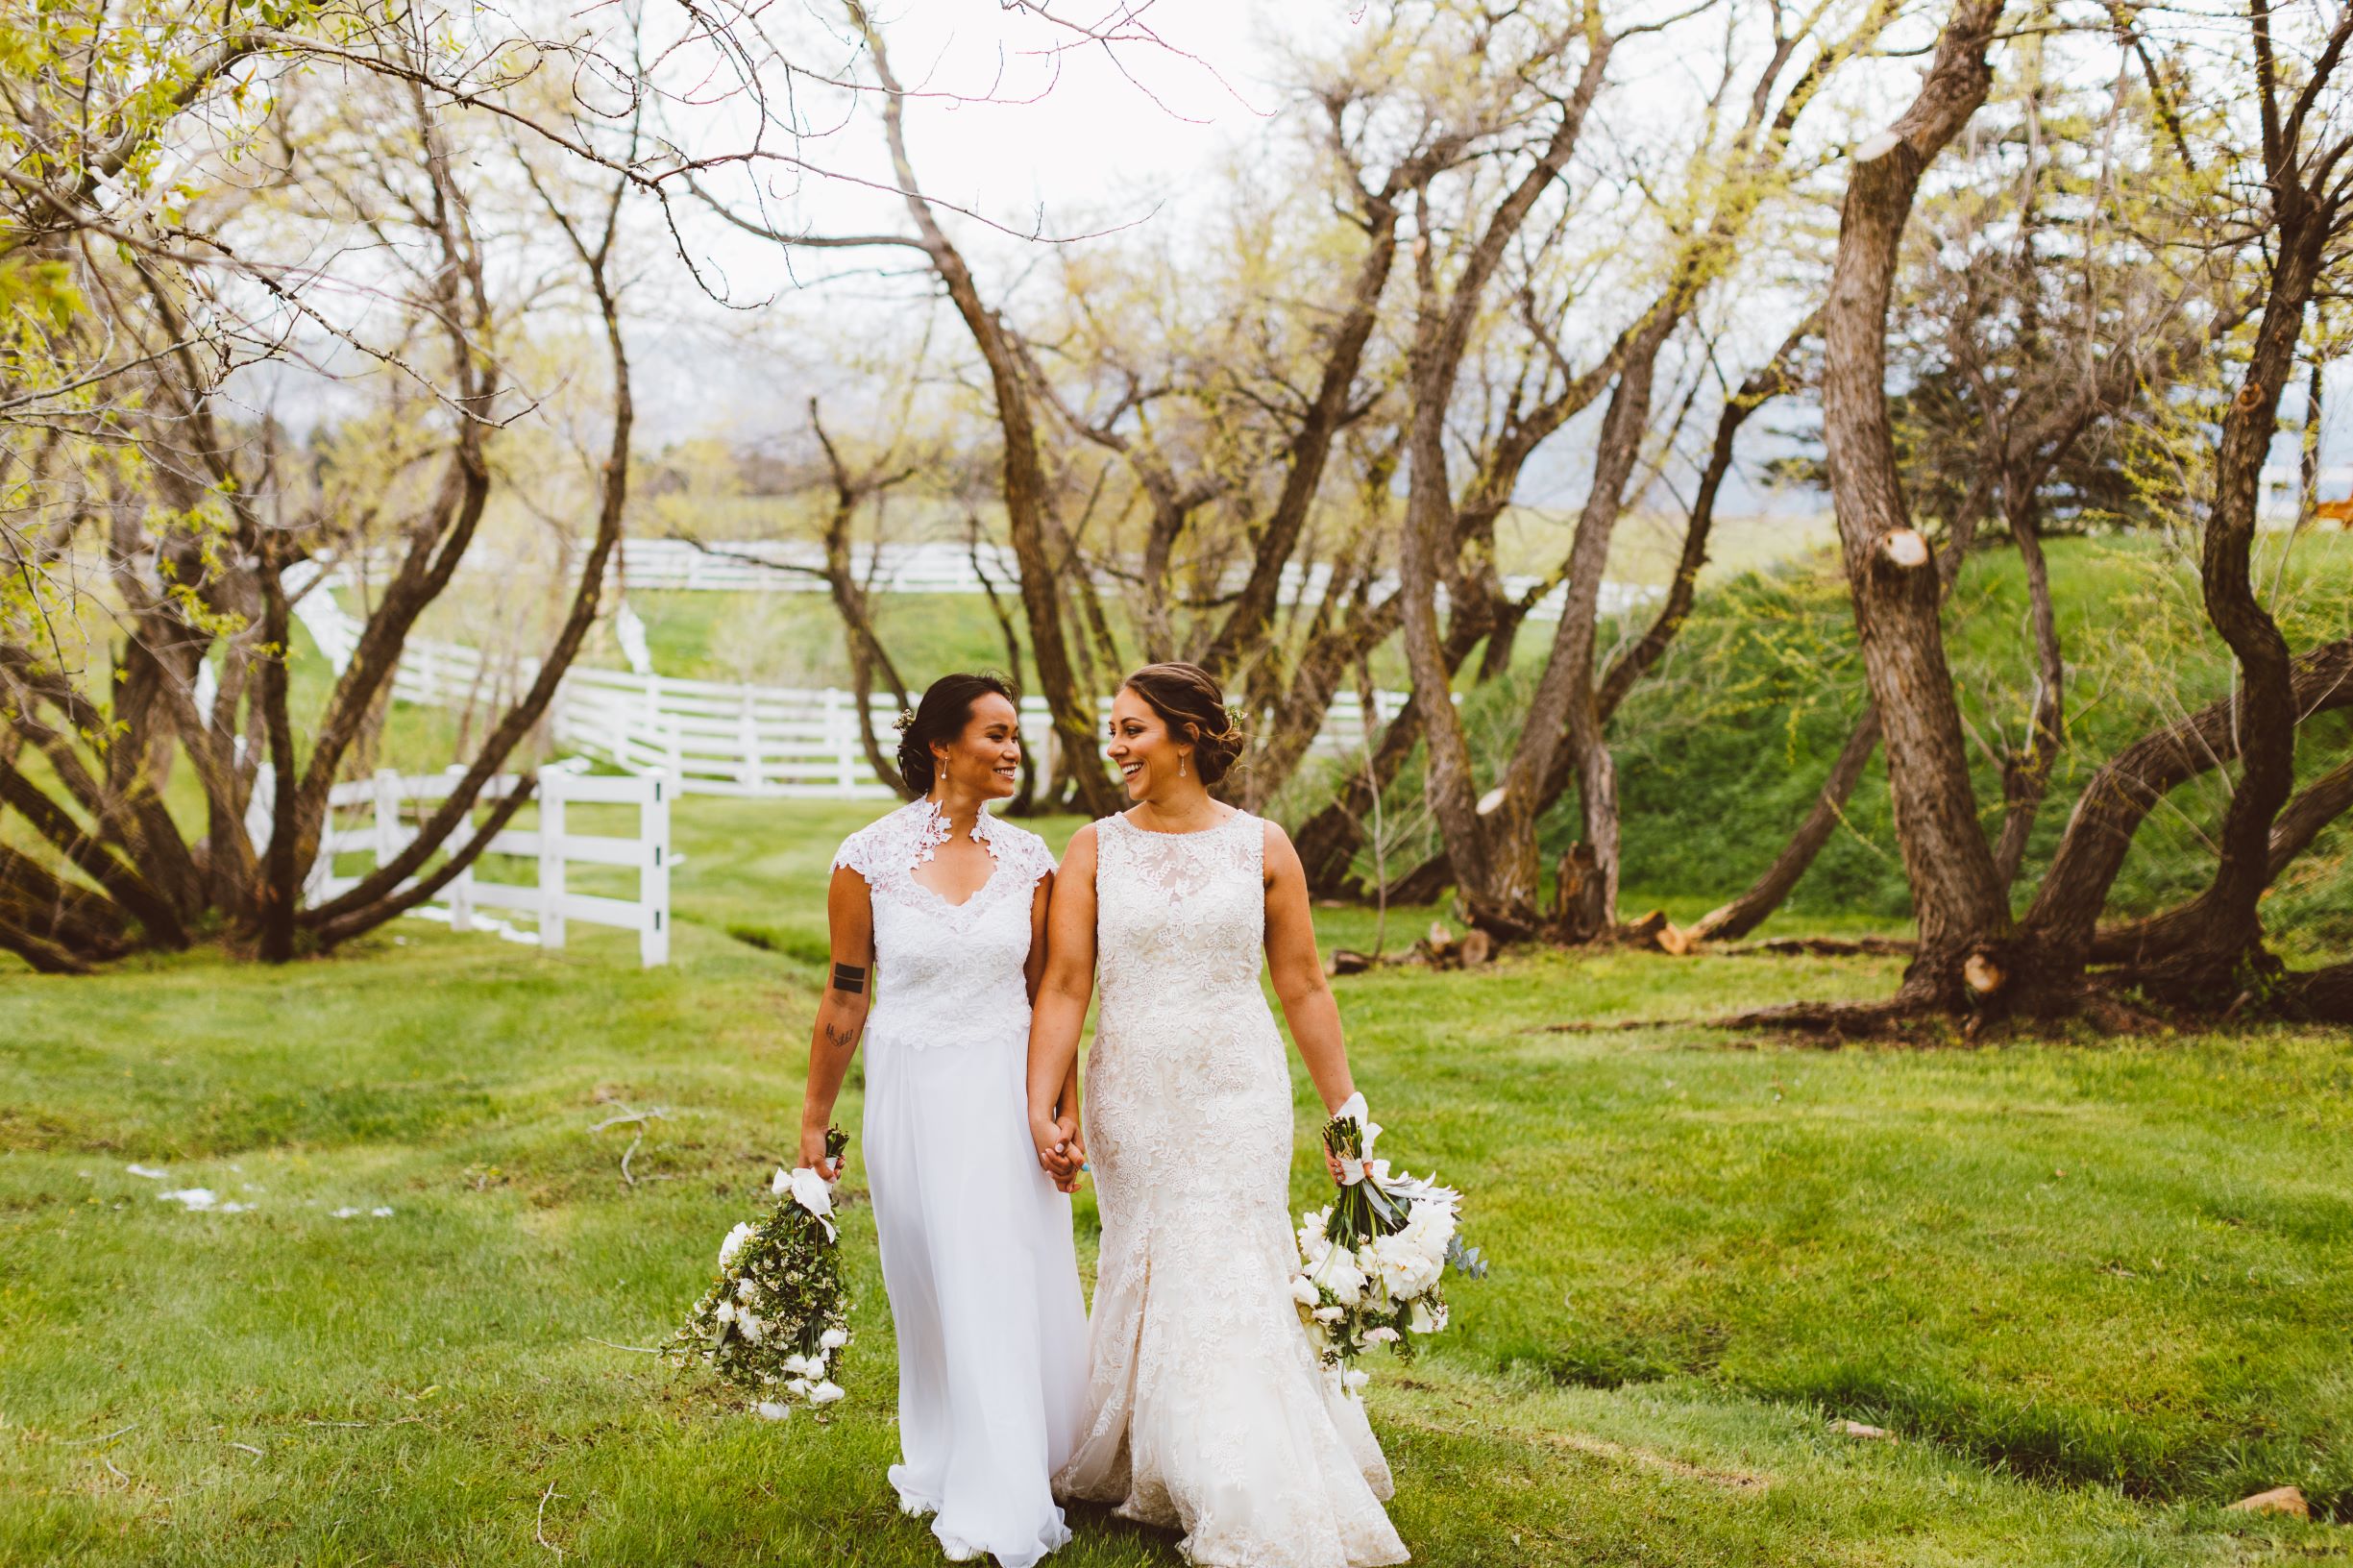 Two women in wedding dresses walk through a field